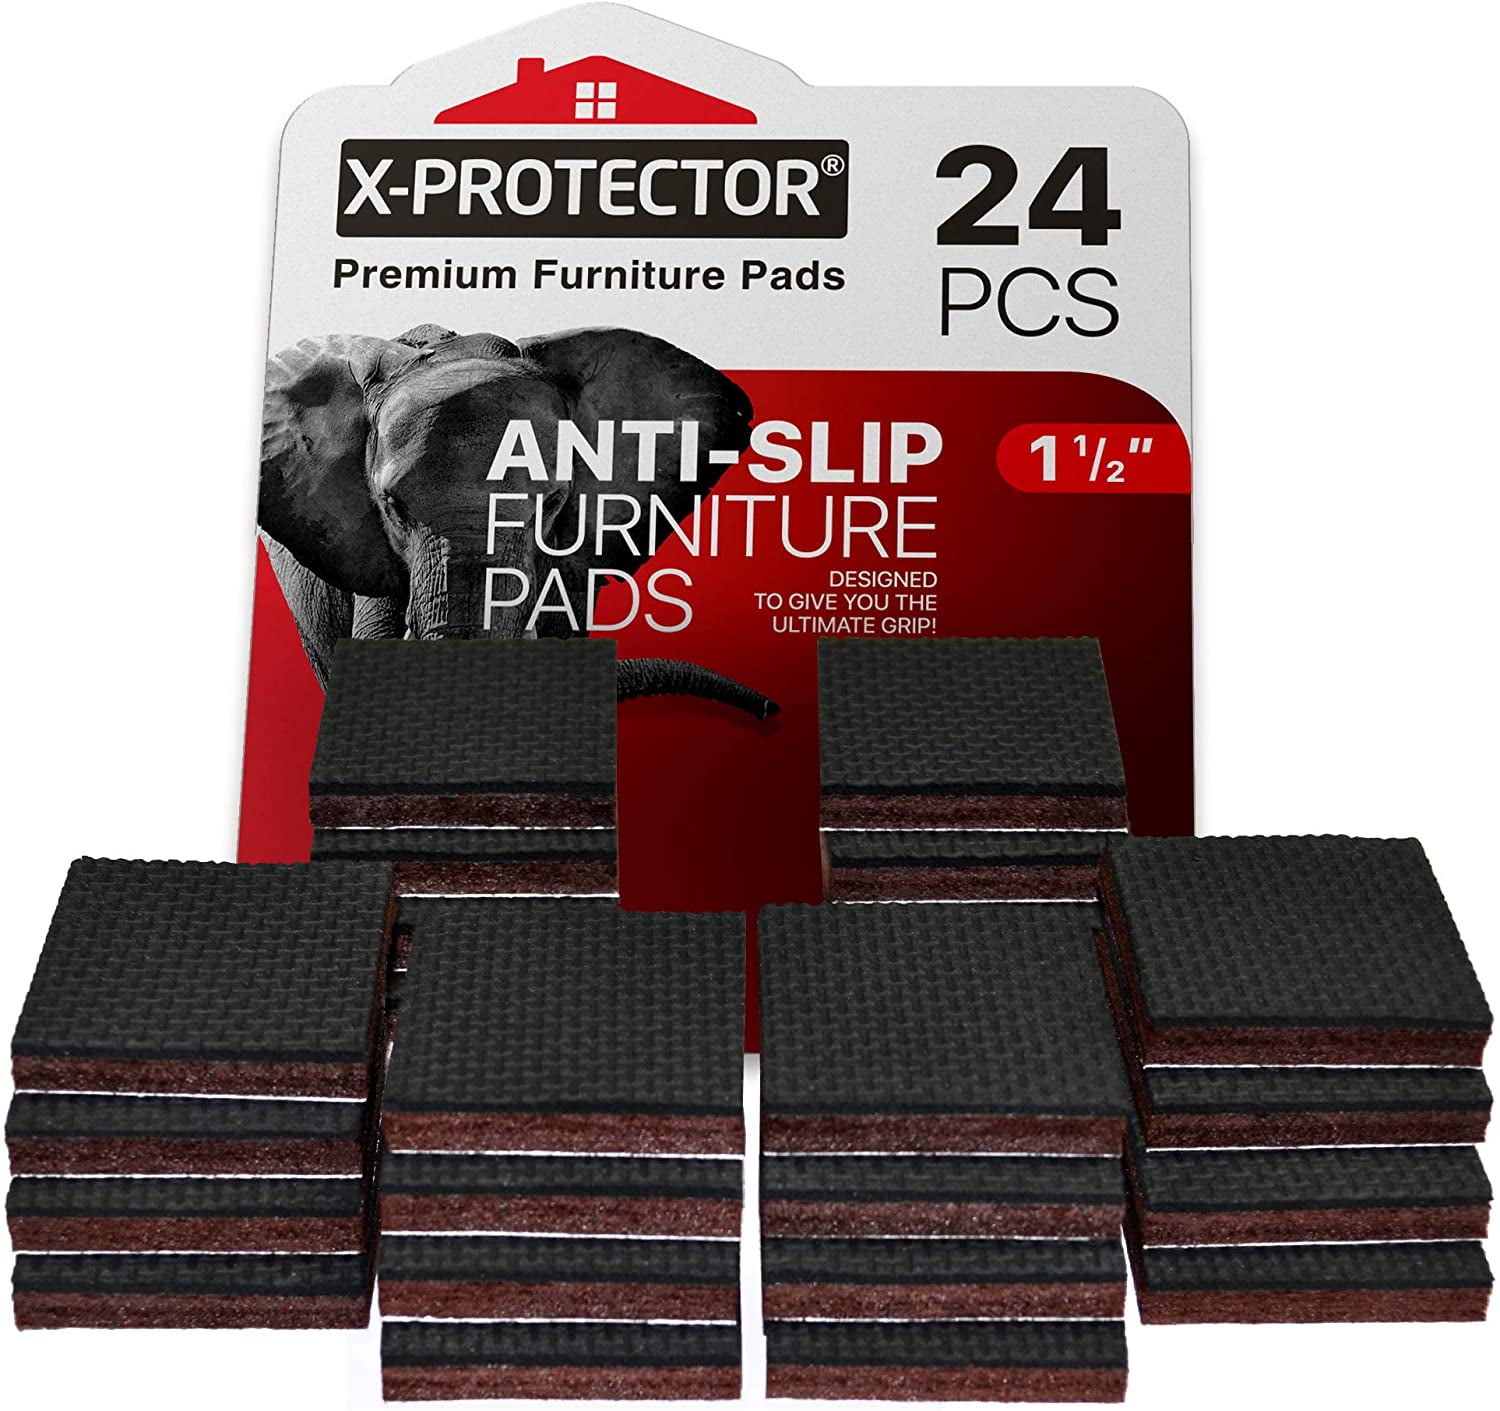 SlipToGrip Non Slip Furniture Pad Grippers - Stops Slide - Multi